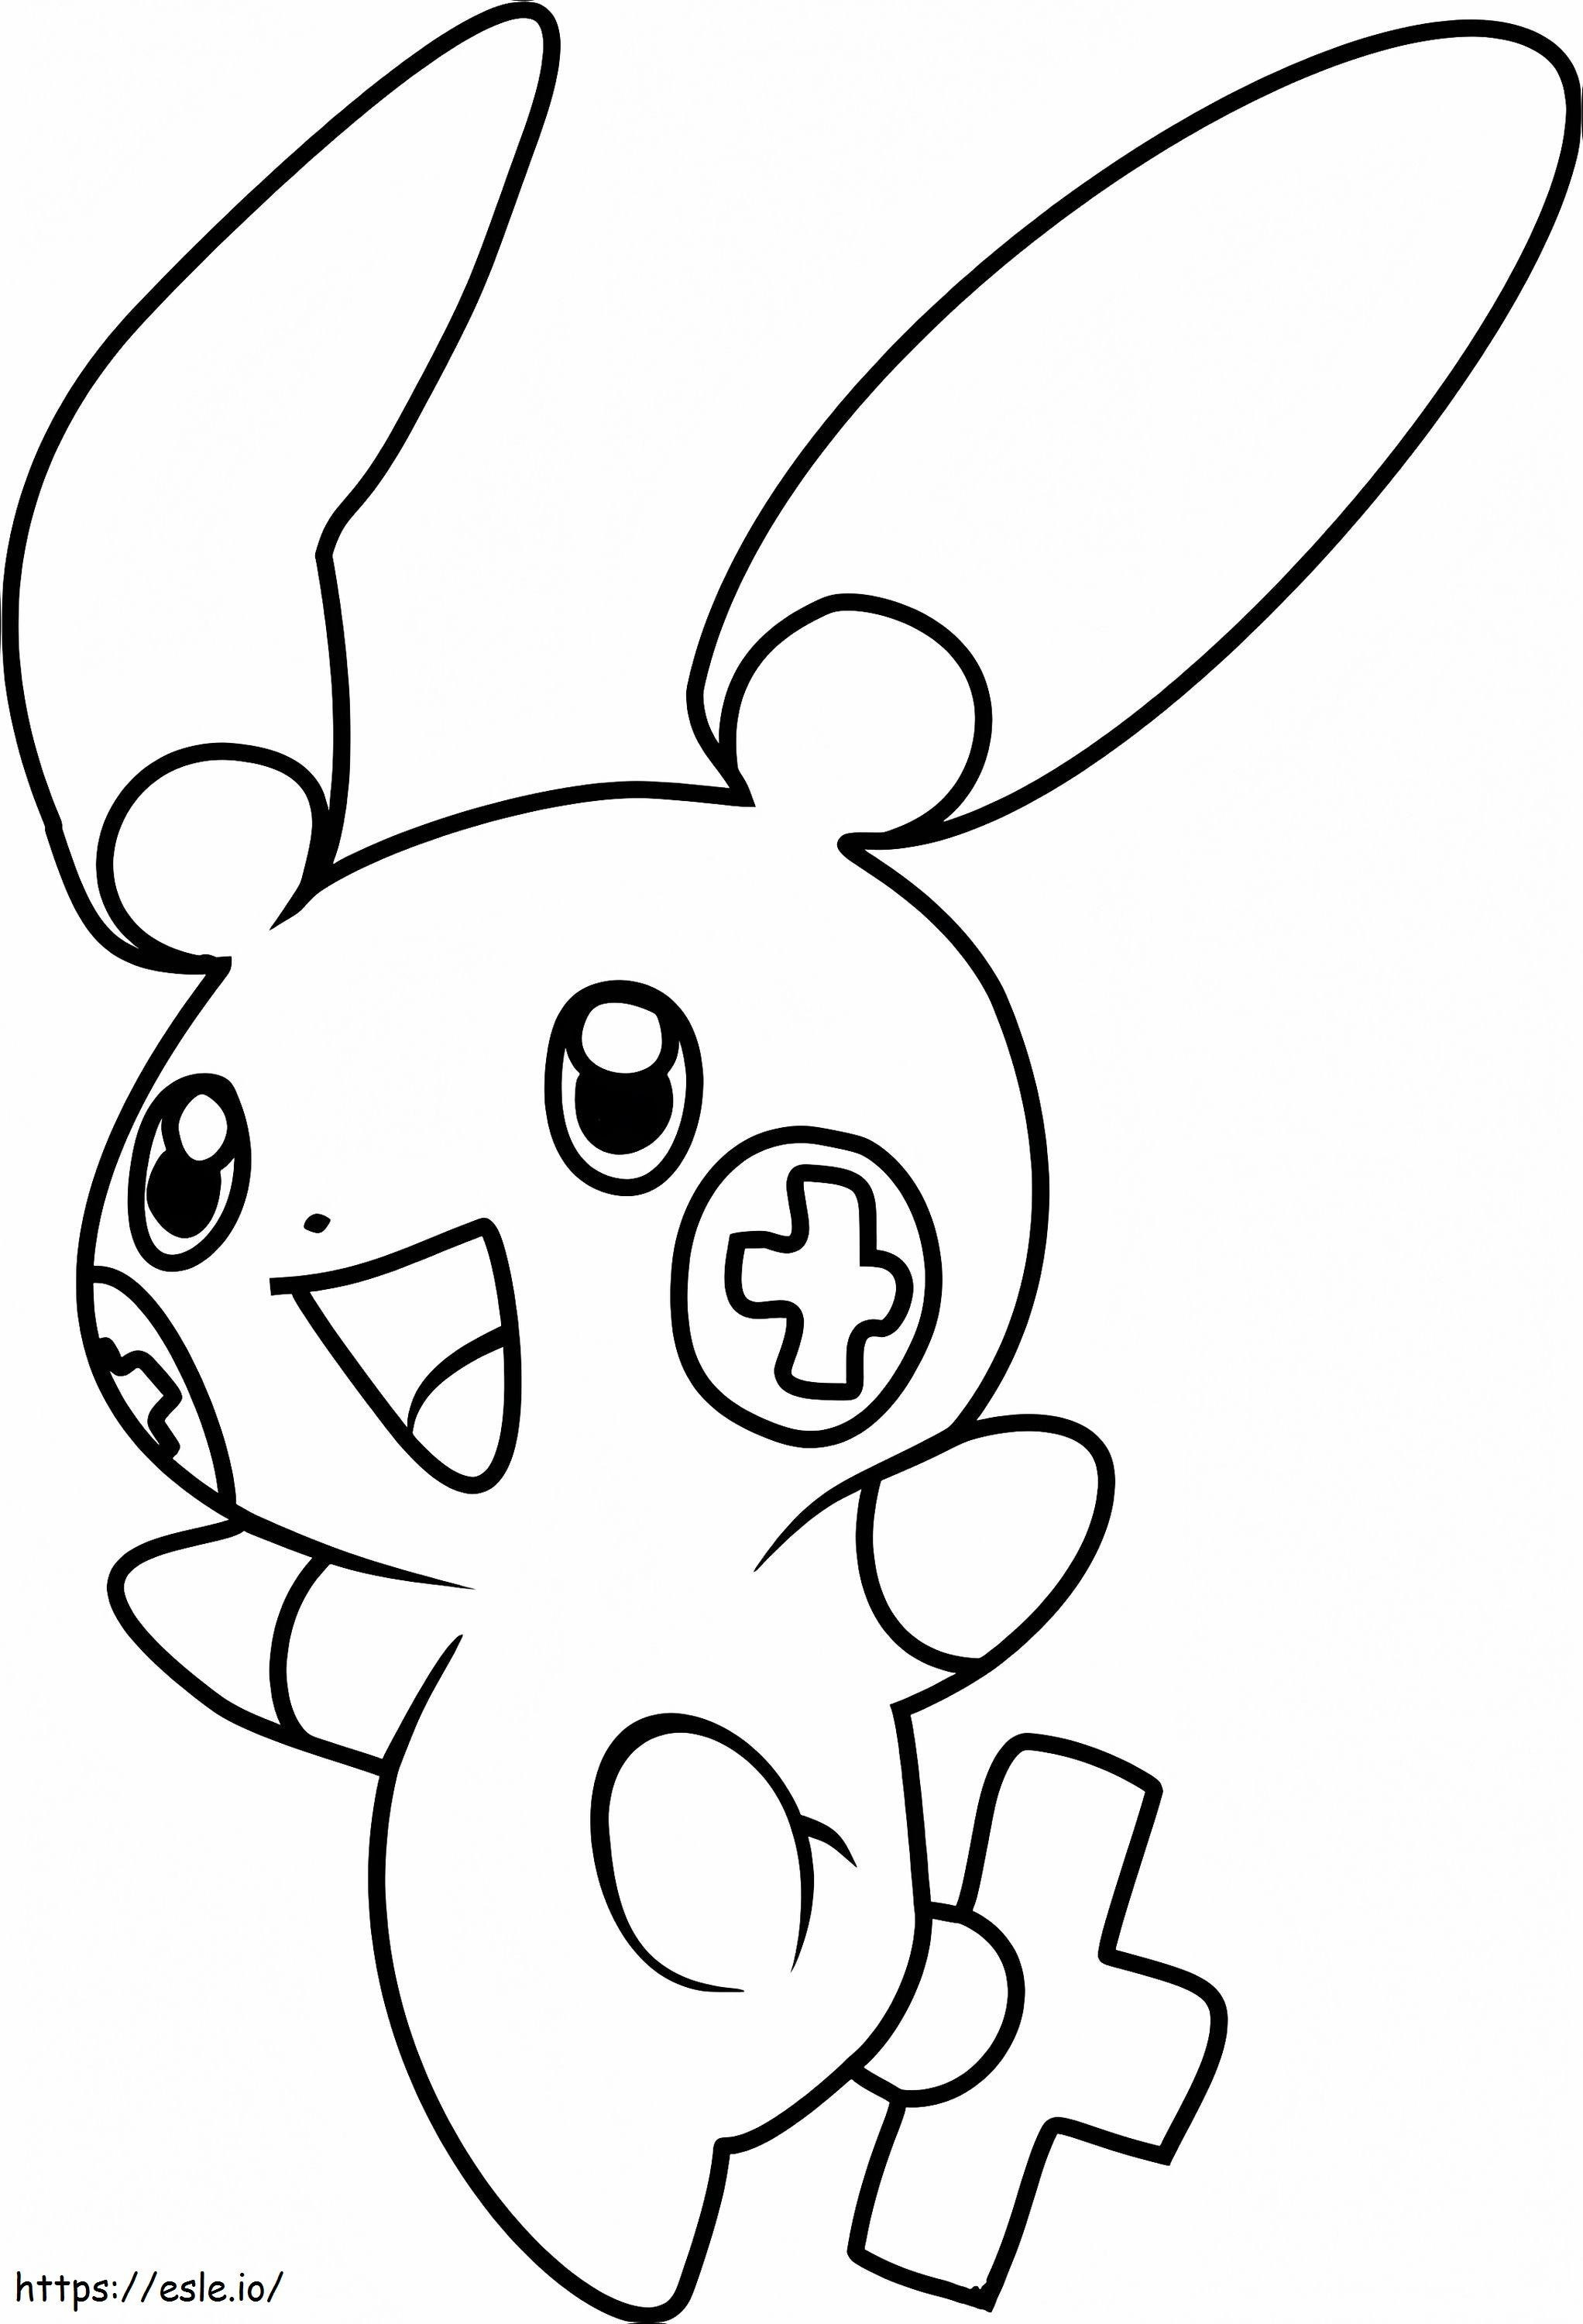 1532316334 Süßes Plusle-Pokémon A4 ausmalbilder